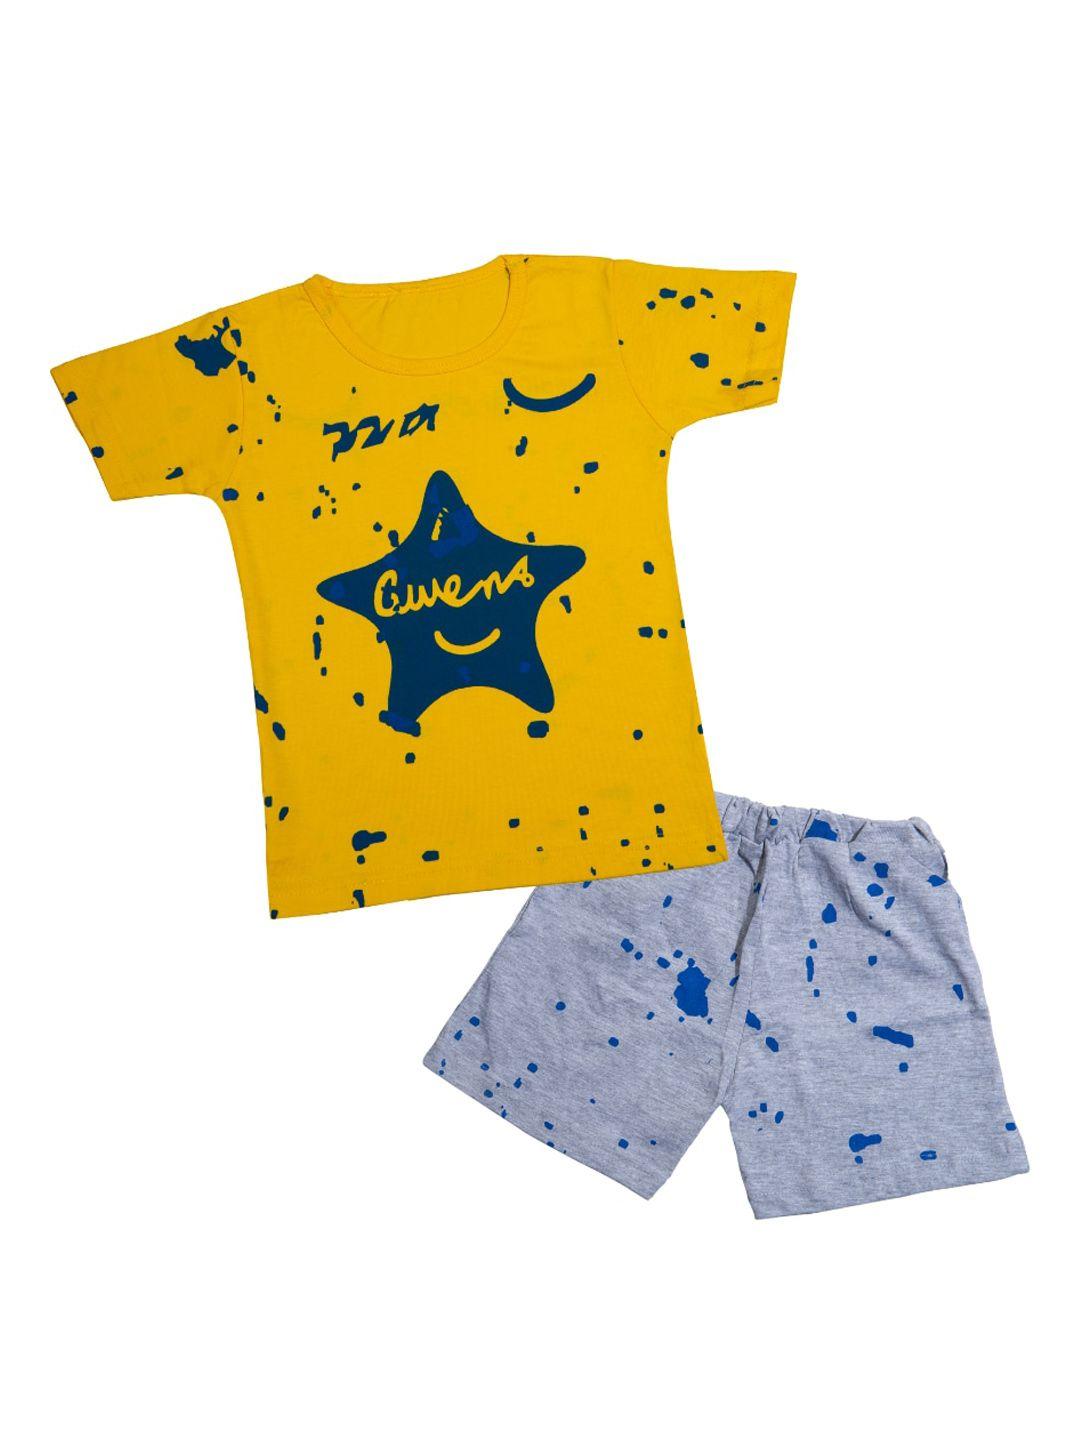 catcub-unisex-kids-yellow-clothing-set